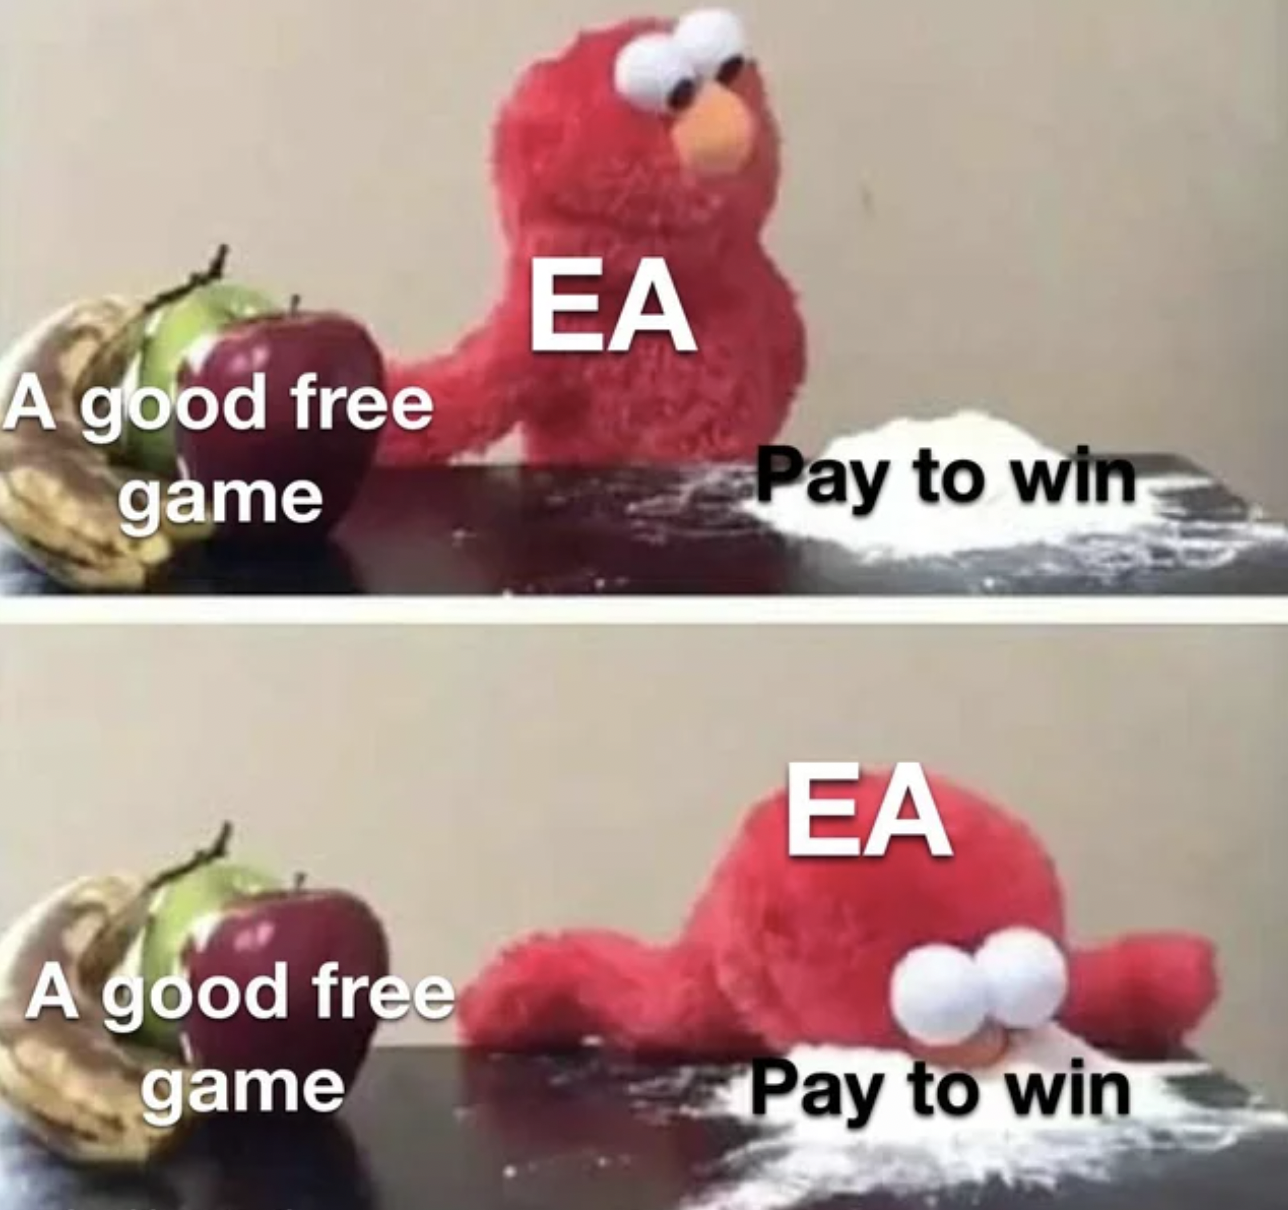 Gaming memes - elmo coke meme - A good free game A good free game Ea Pay to win Ea Pay to win